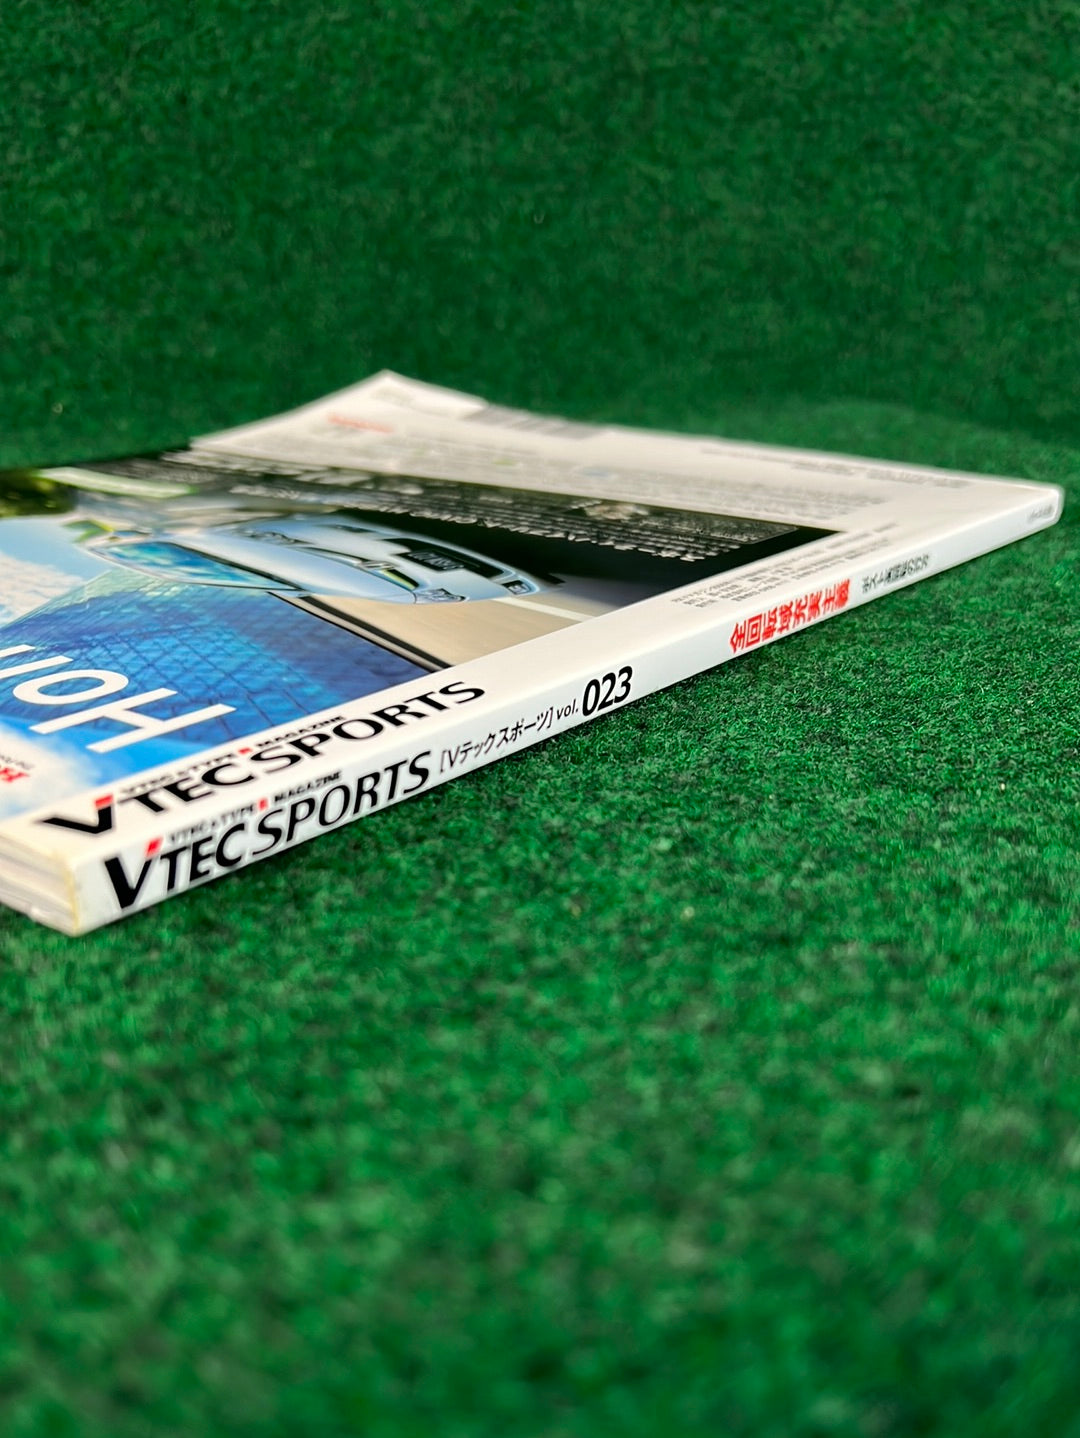 VTEC SPORTS Magazine - Vol. 023